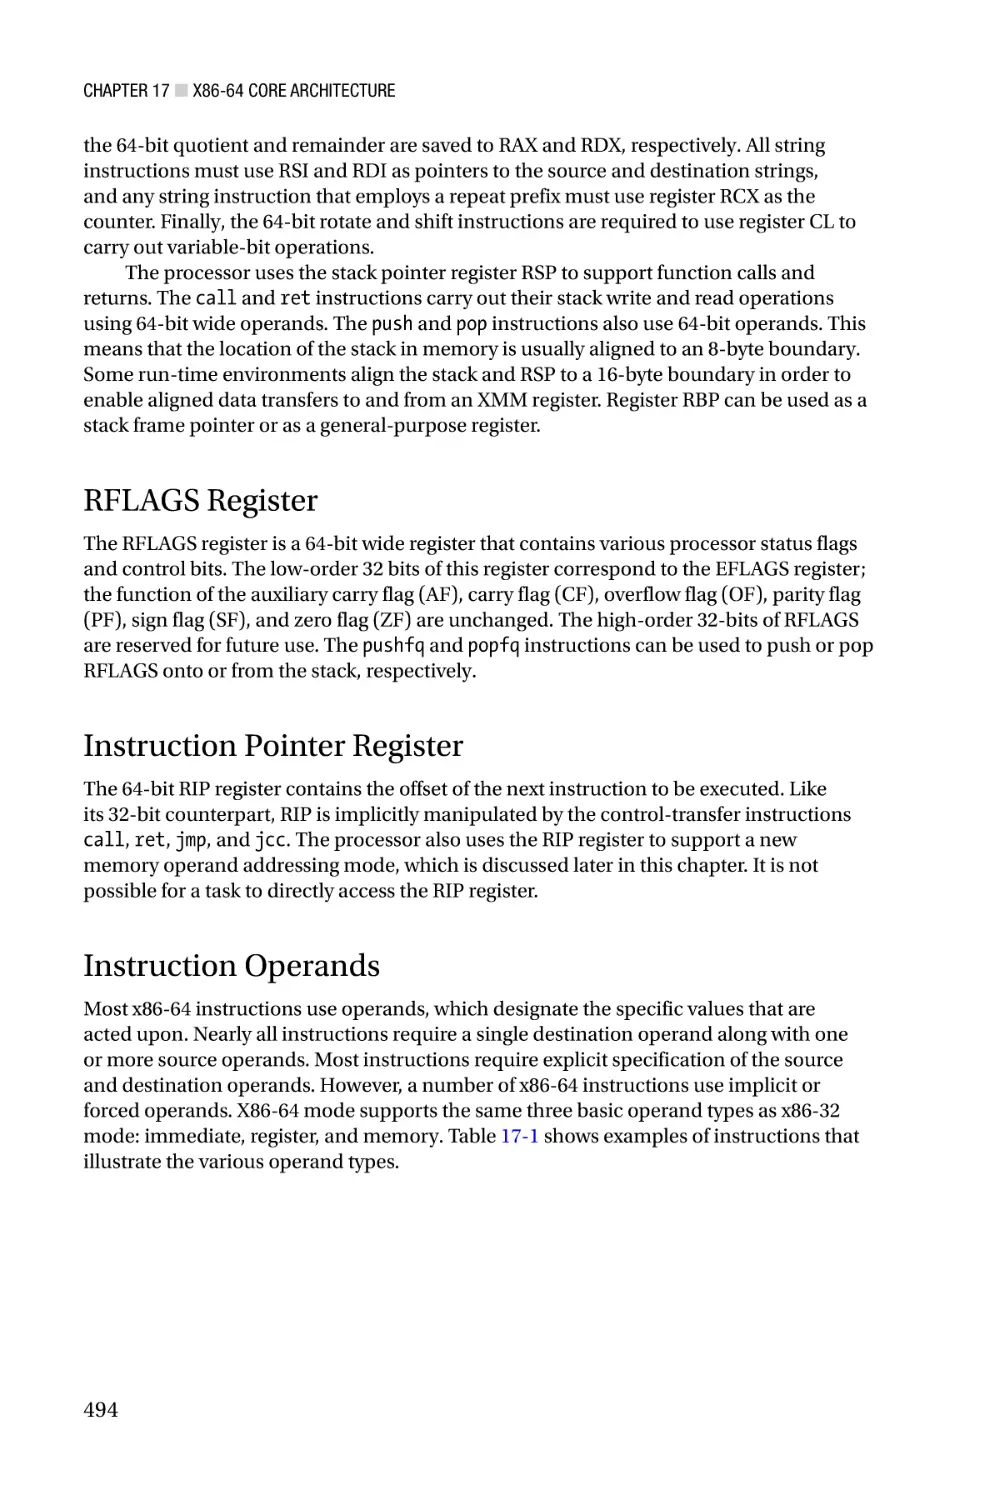 RFLAGS Register
Instruction Pointer Register
Instruction Operands